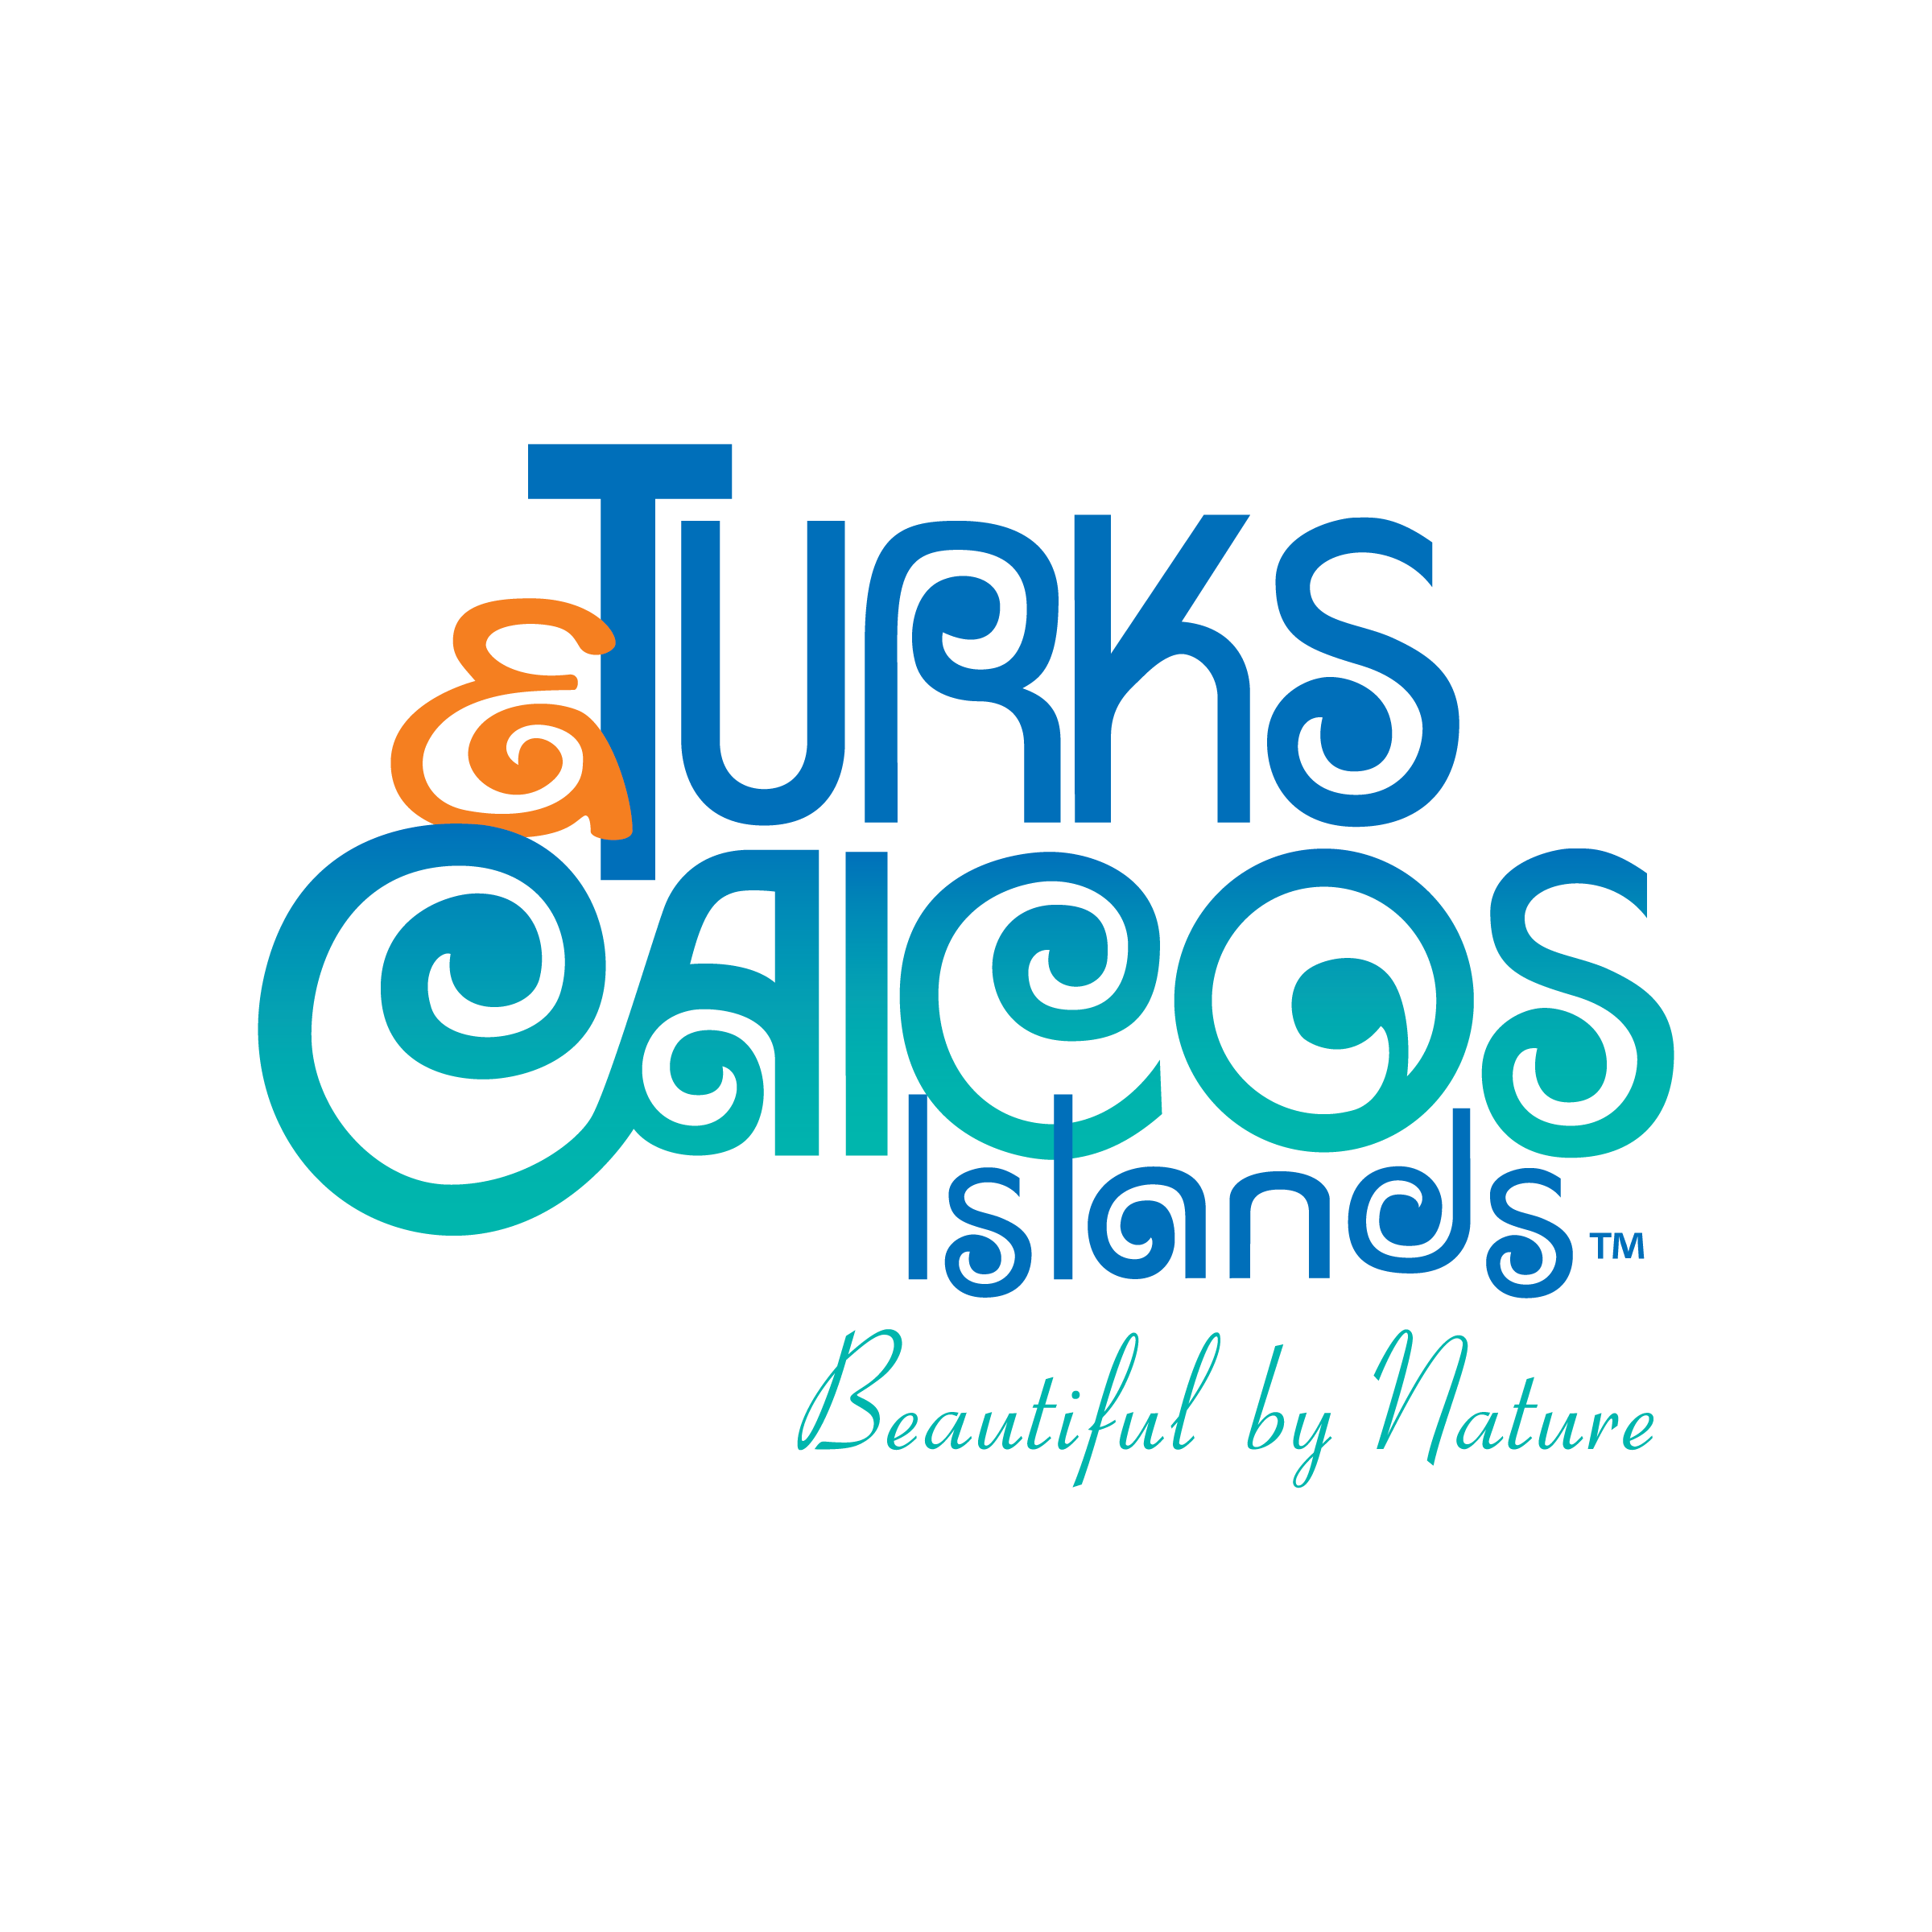 Turks and Caicos Islands Tourist Board